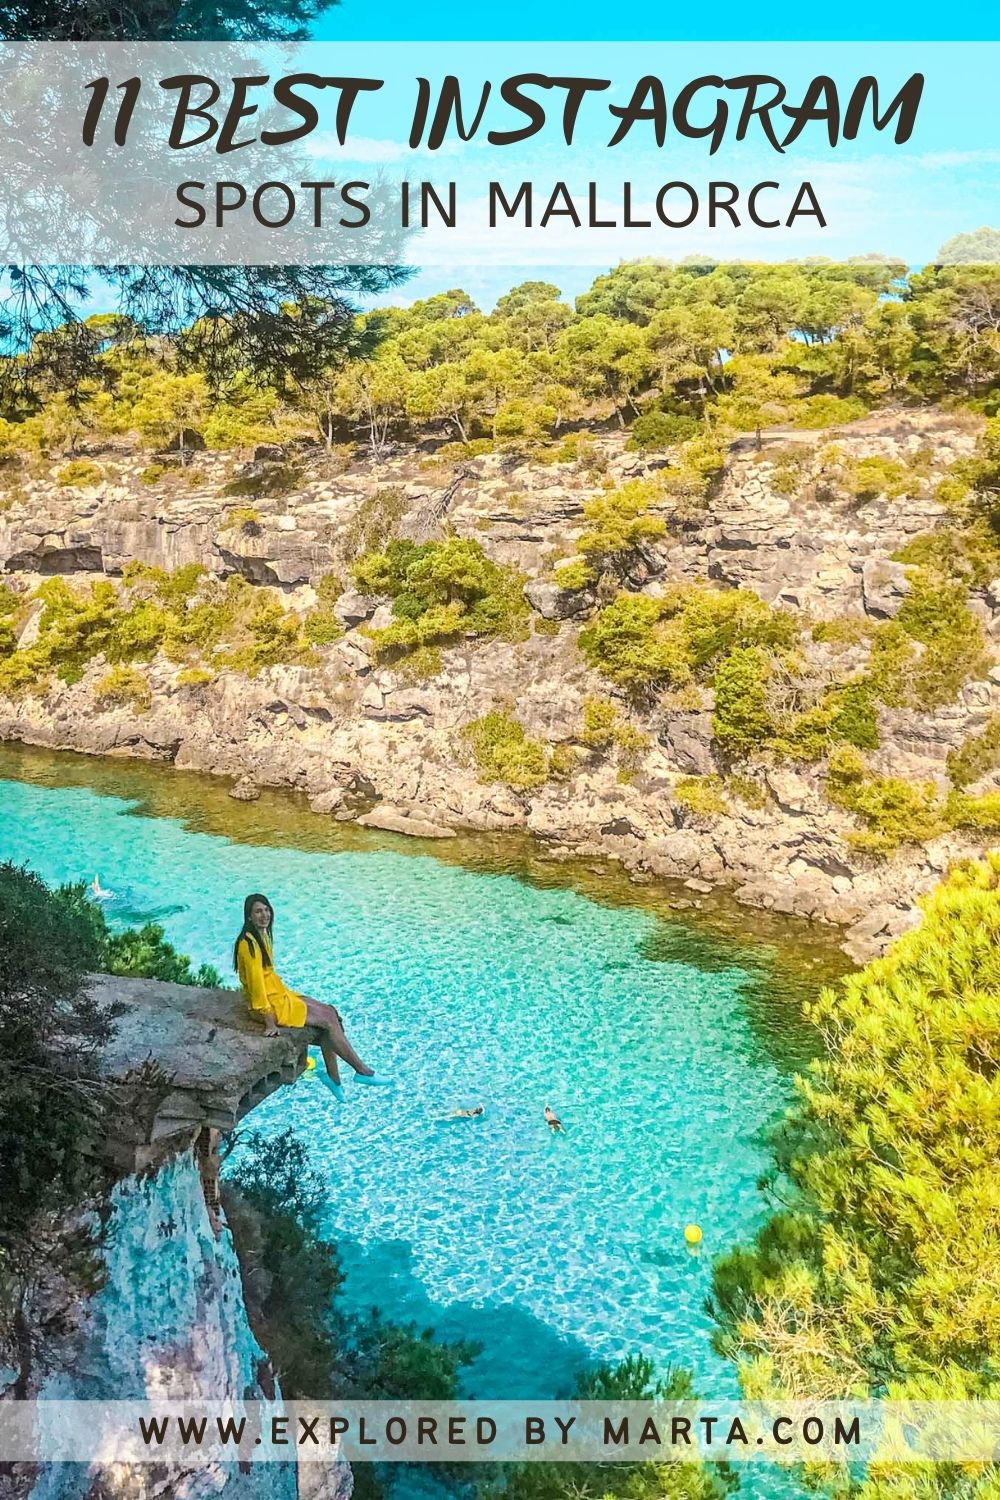 11 most famous Instagram spots in Mallorca